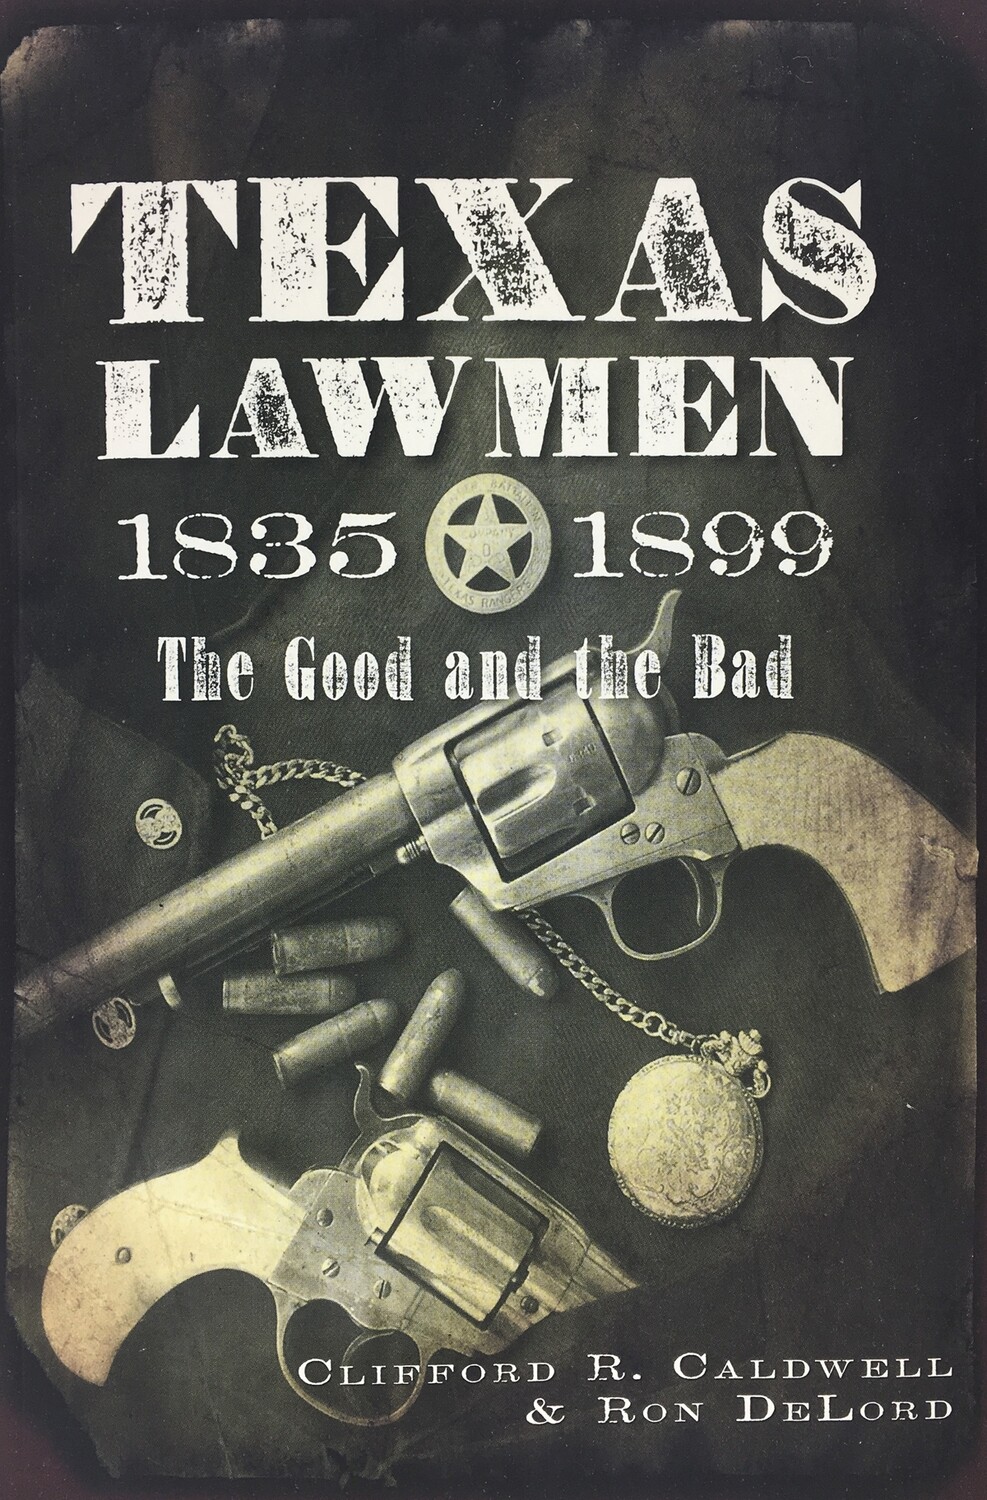 Texas Lawmen 1835 - 1899